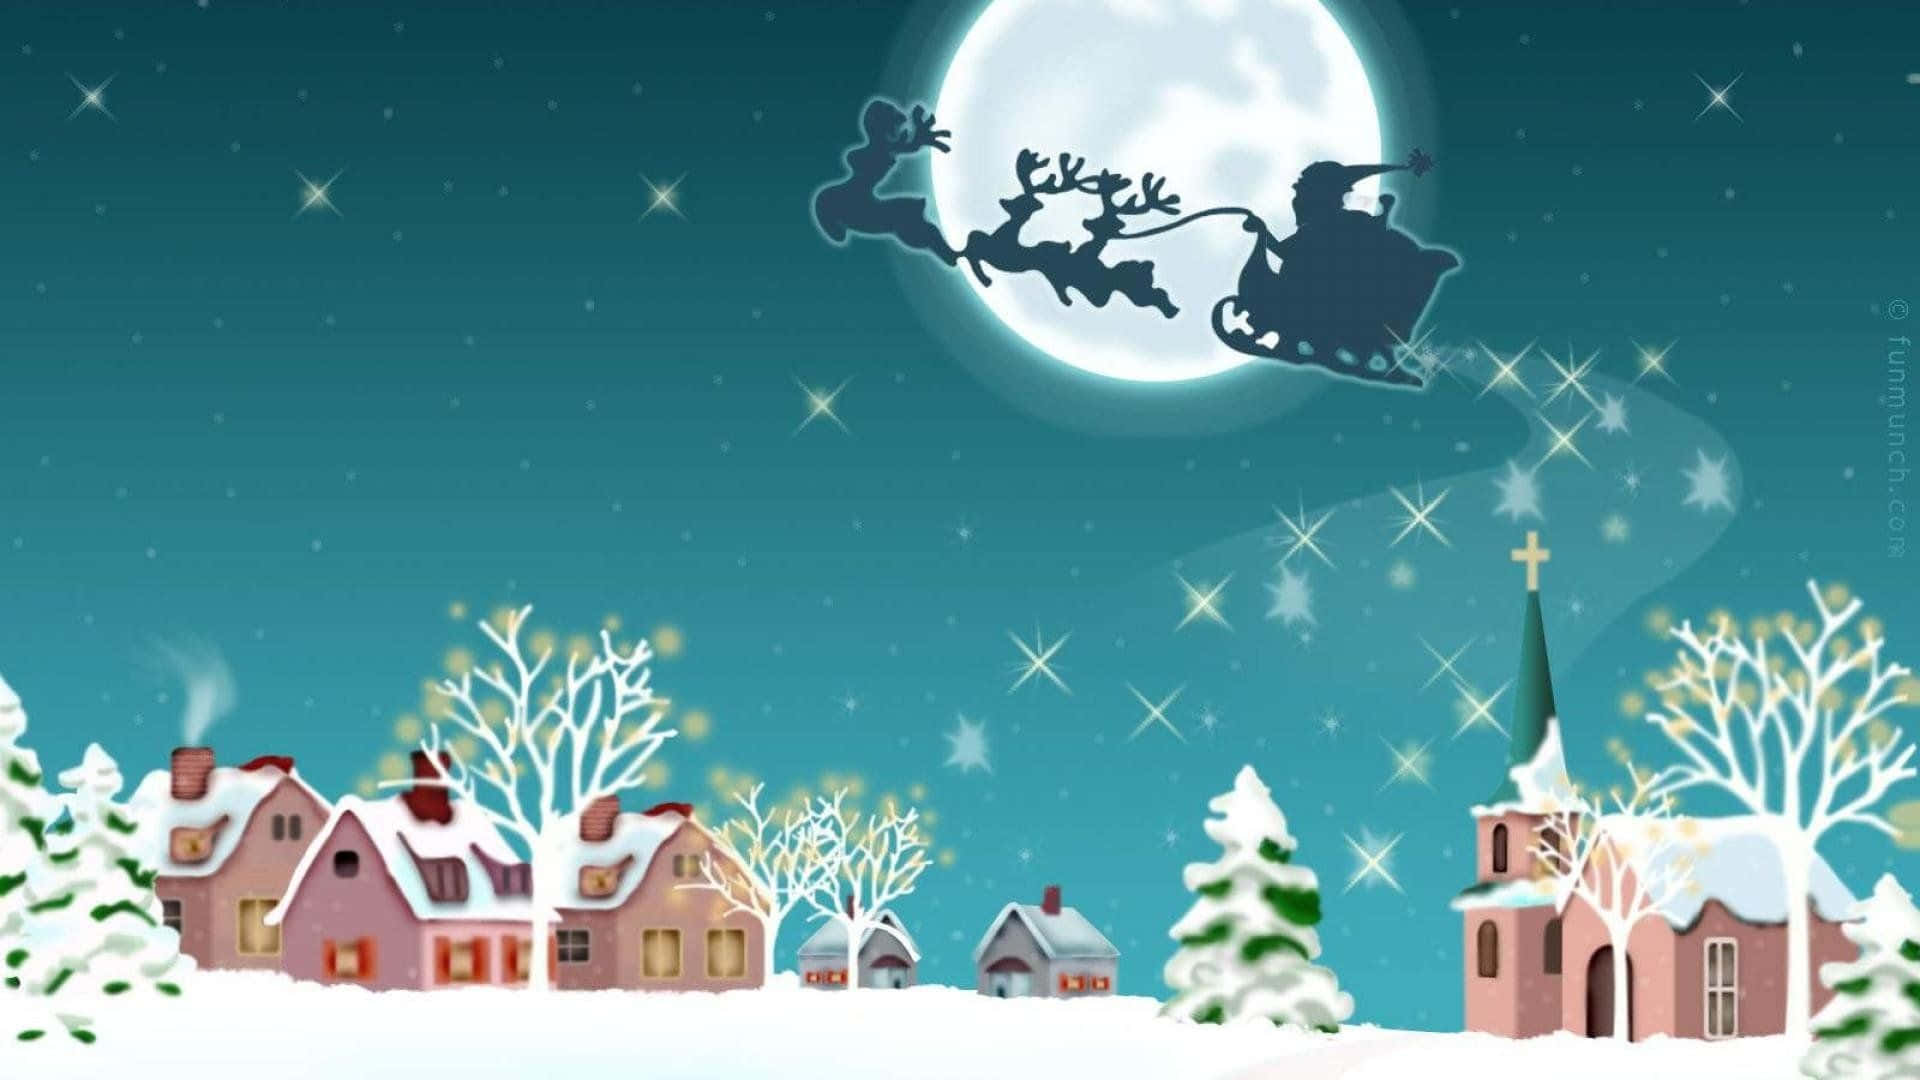 Santa Claus Flying Over A Snowy Village Wallpaper